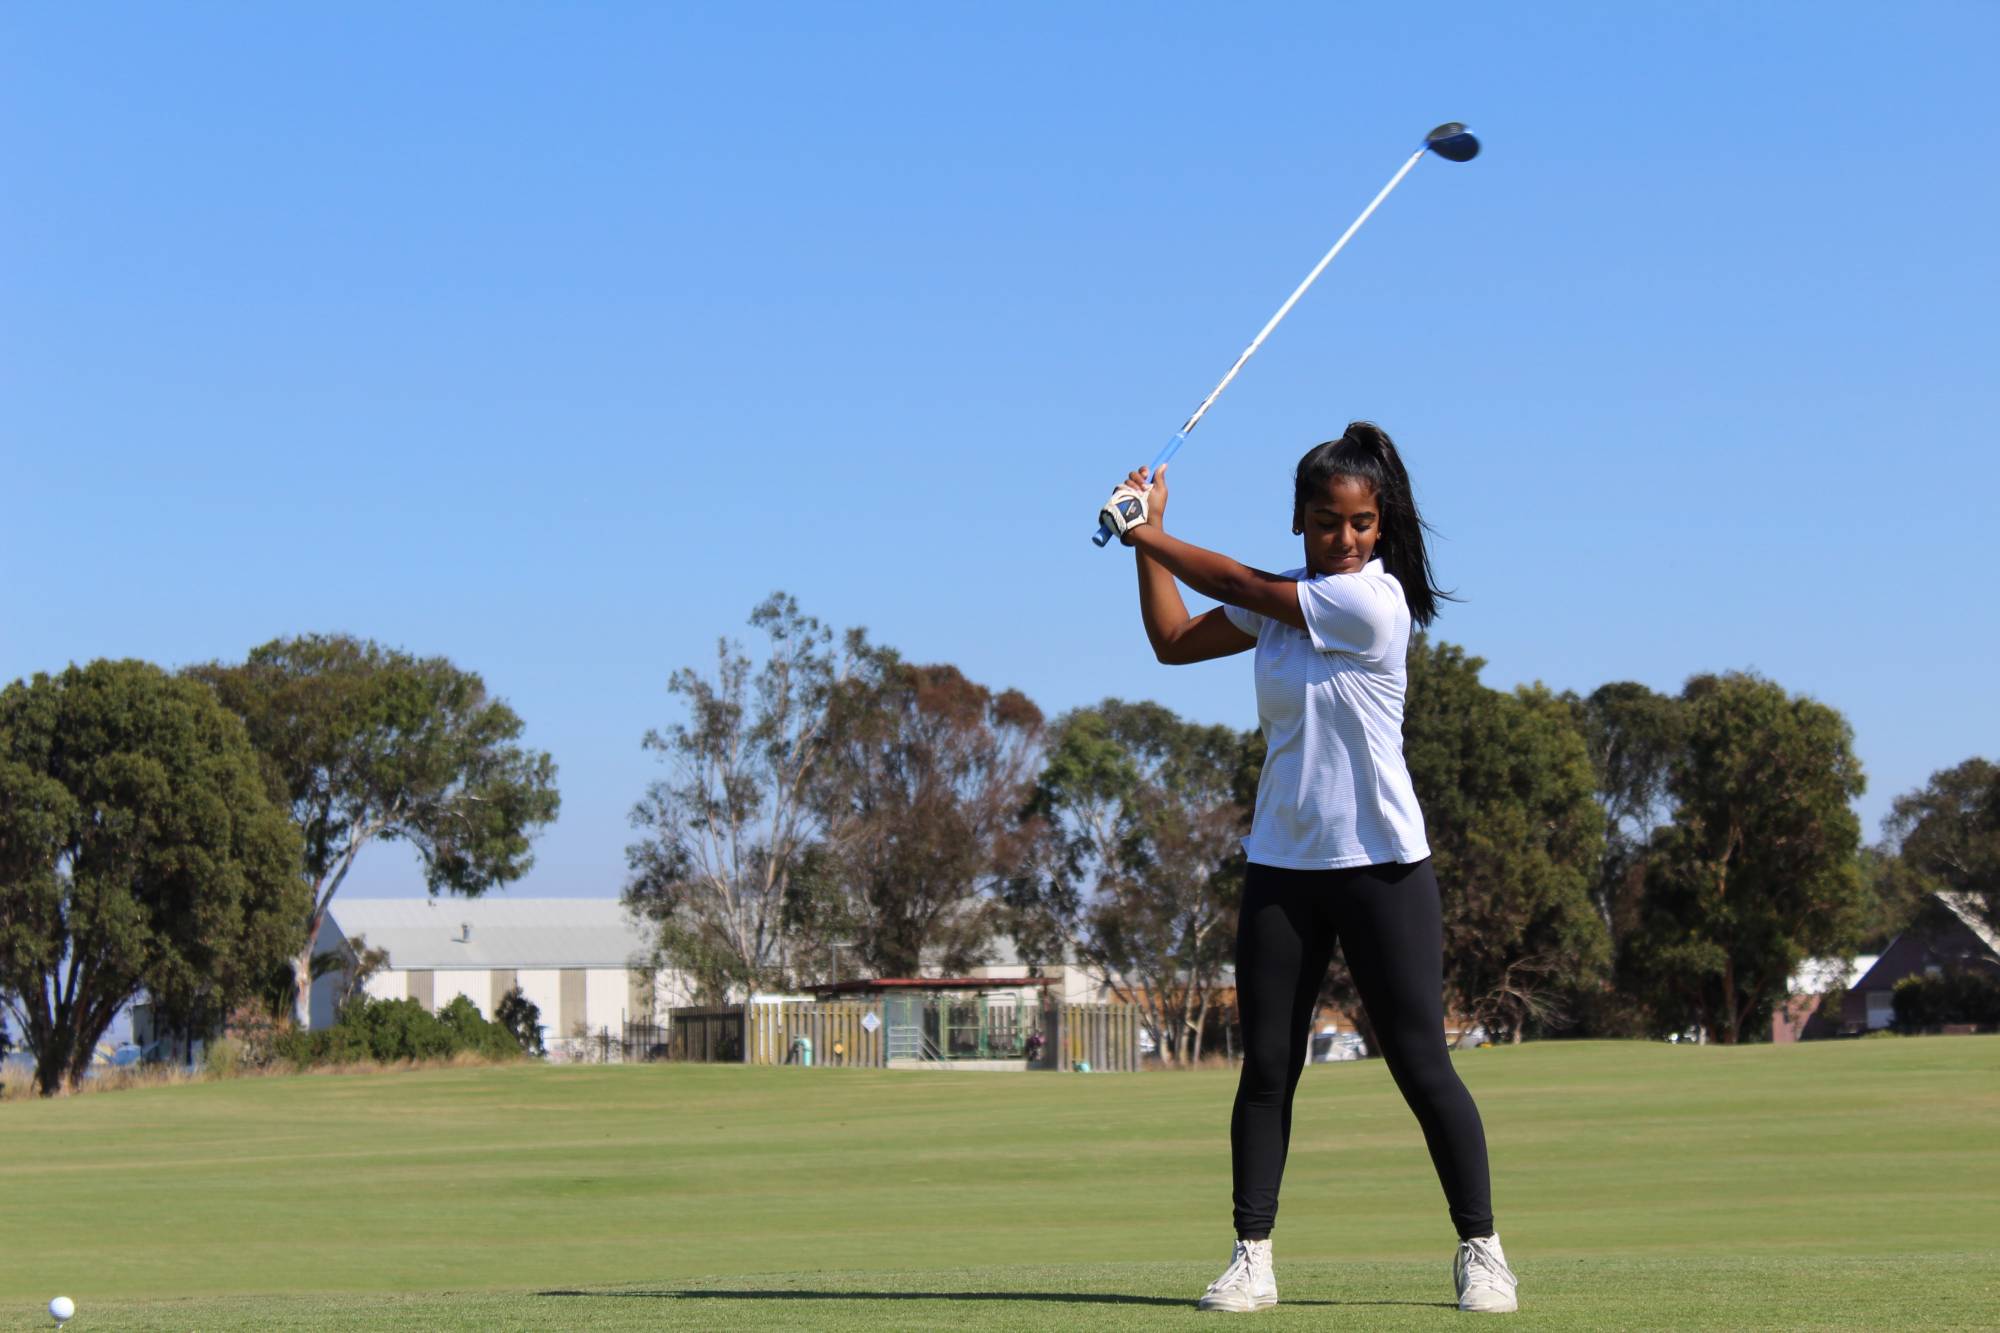 Best Women’s Golf Clubs For Intermediate Players